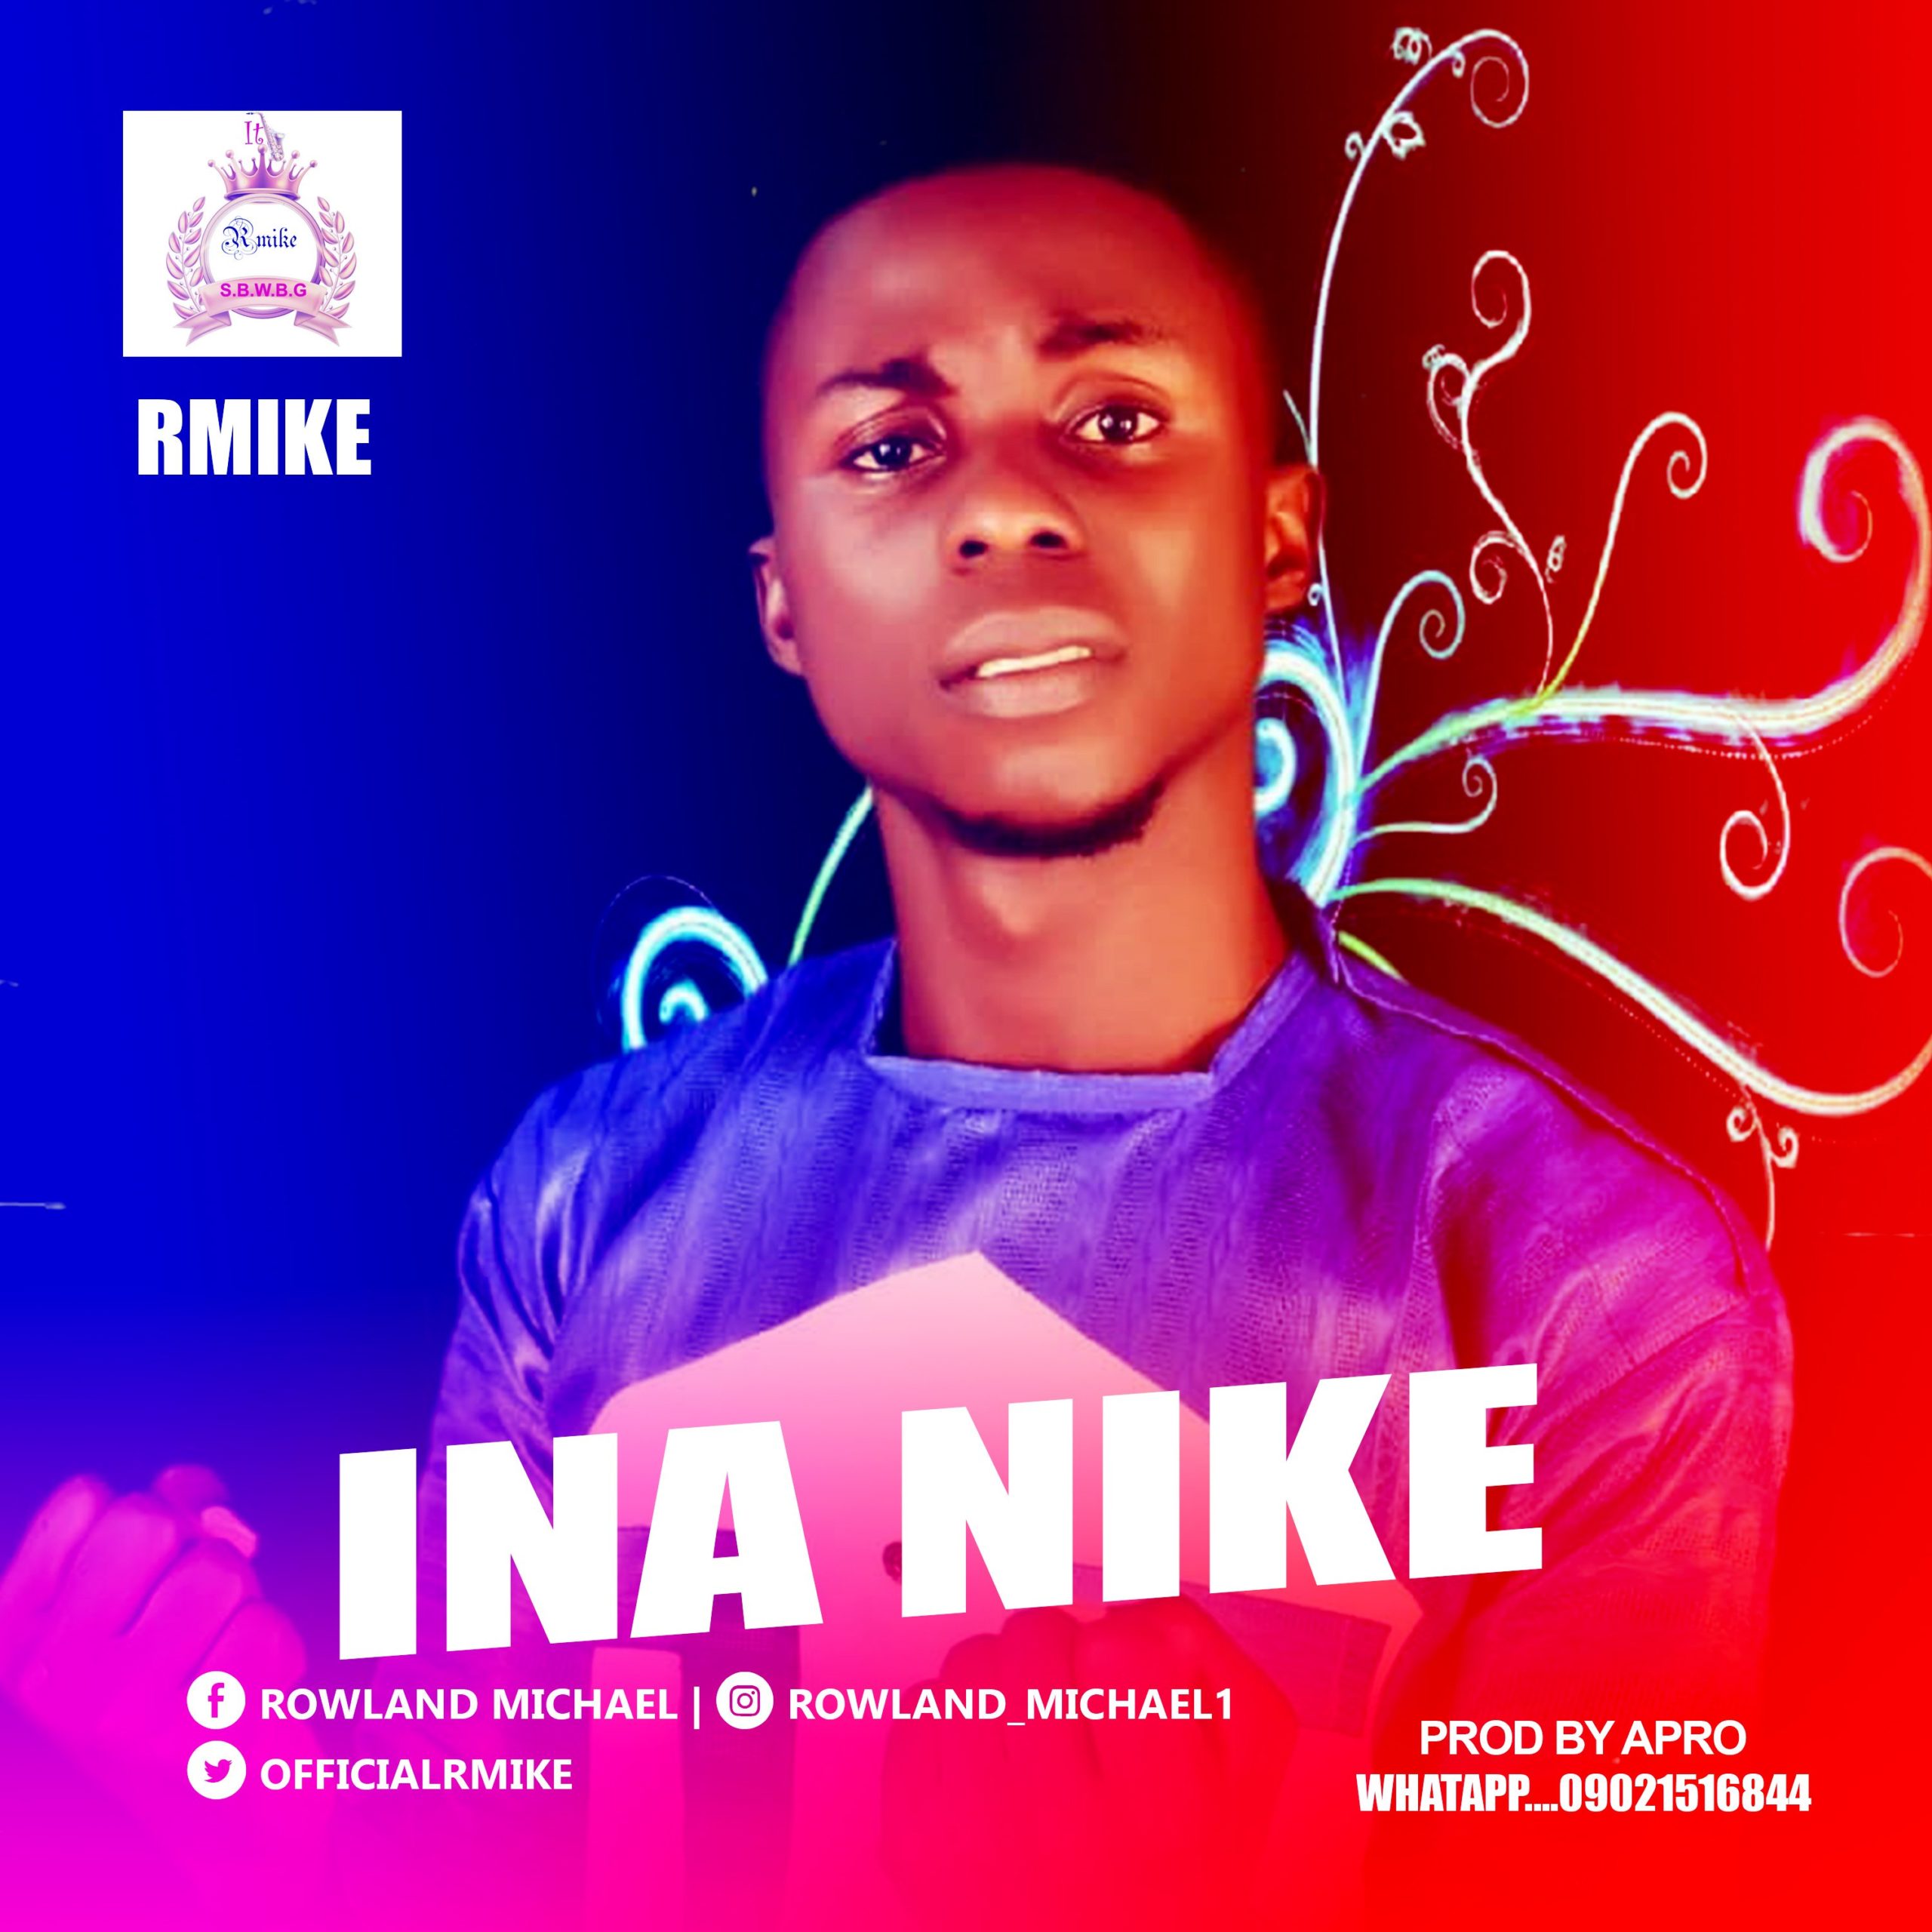 DOWNLOAD Music: Rmike - Ina Nike